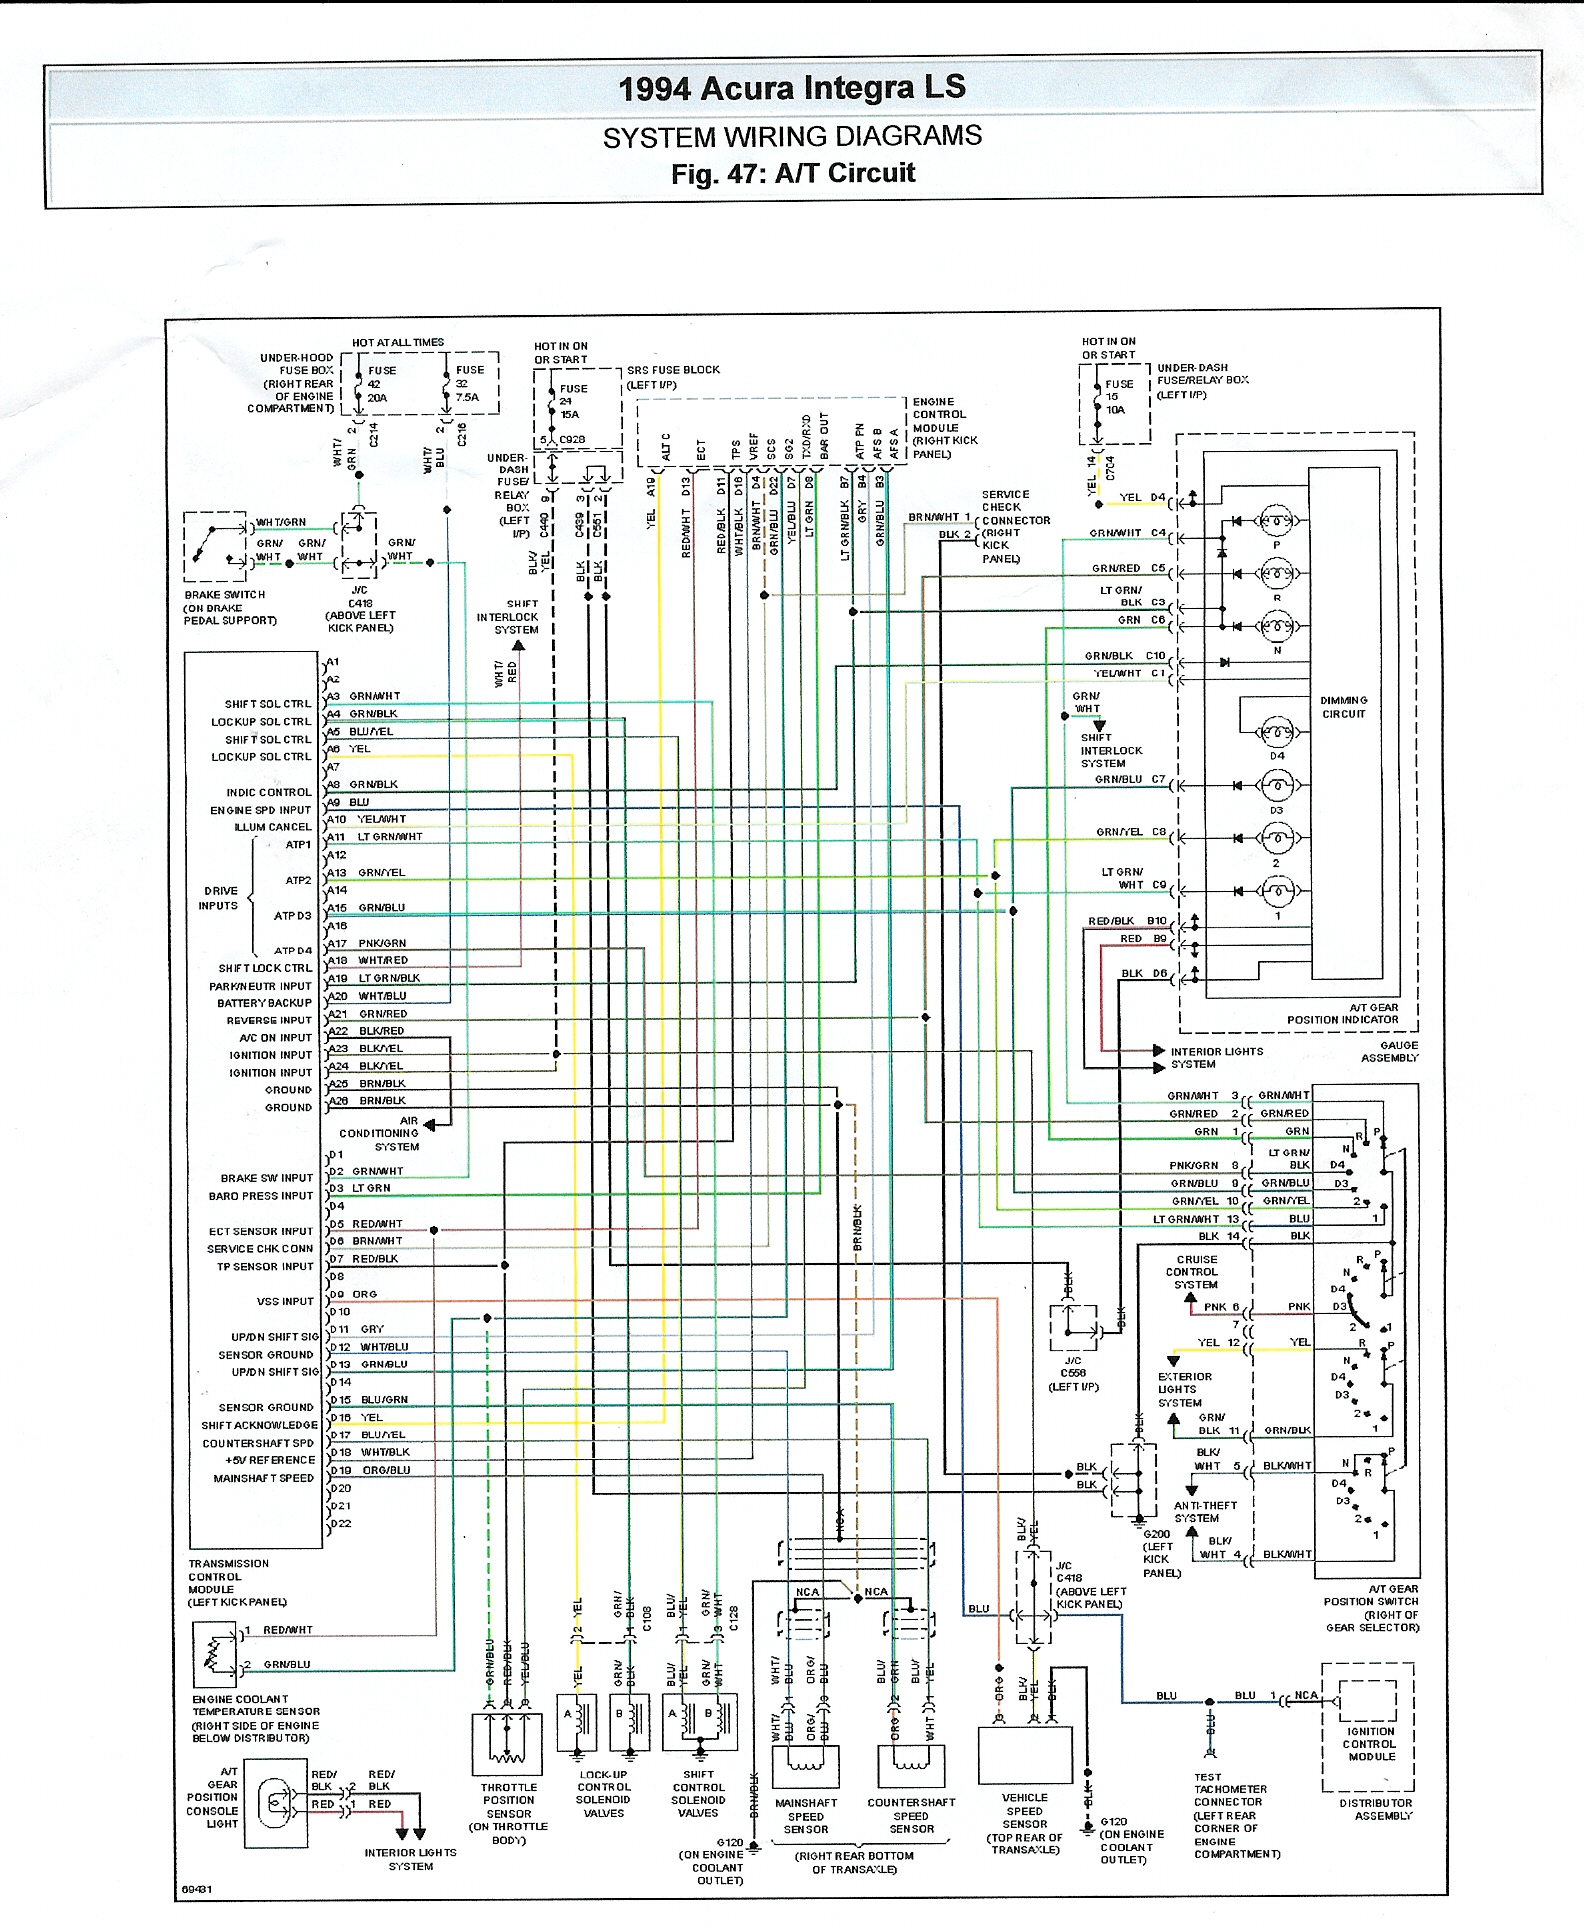 Integra TCM wiring schematic for Auto swap... - Honda-Tech - Honda